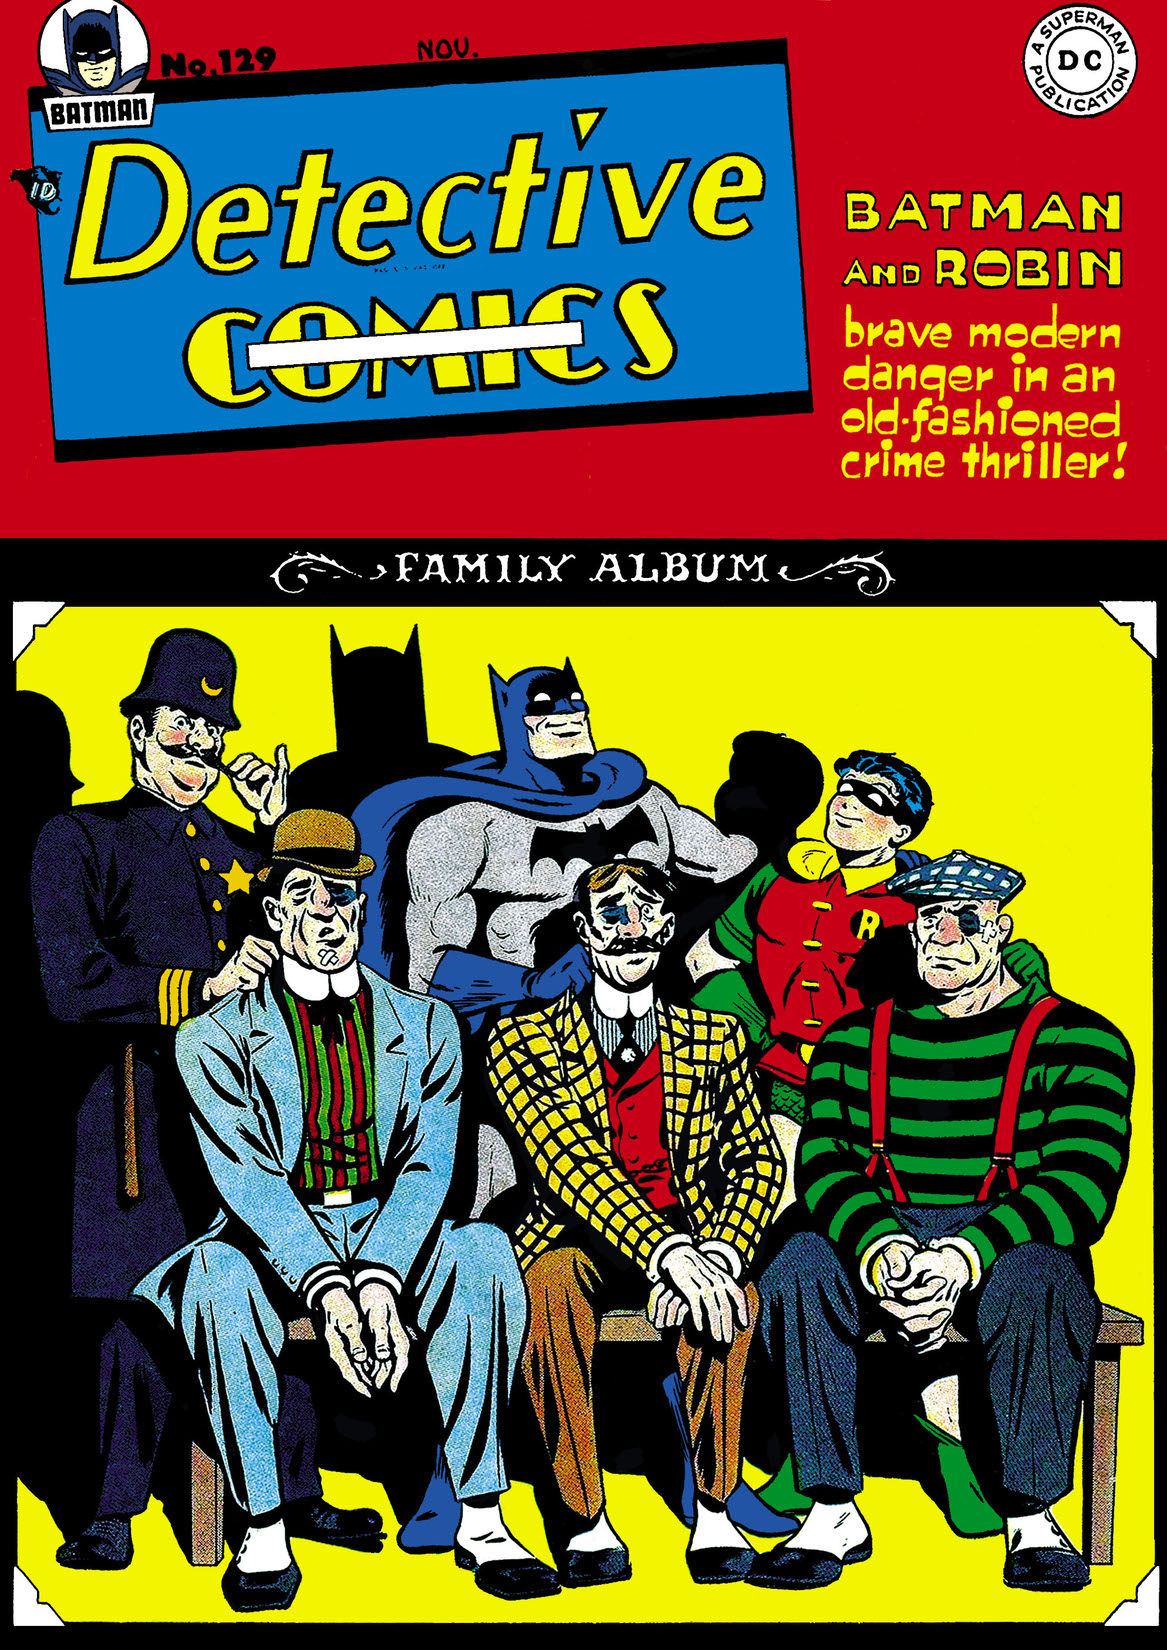 Detective Comics (1937-) #129 preview images